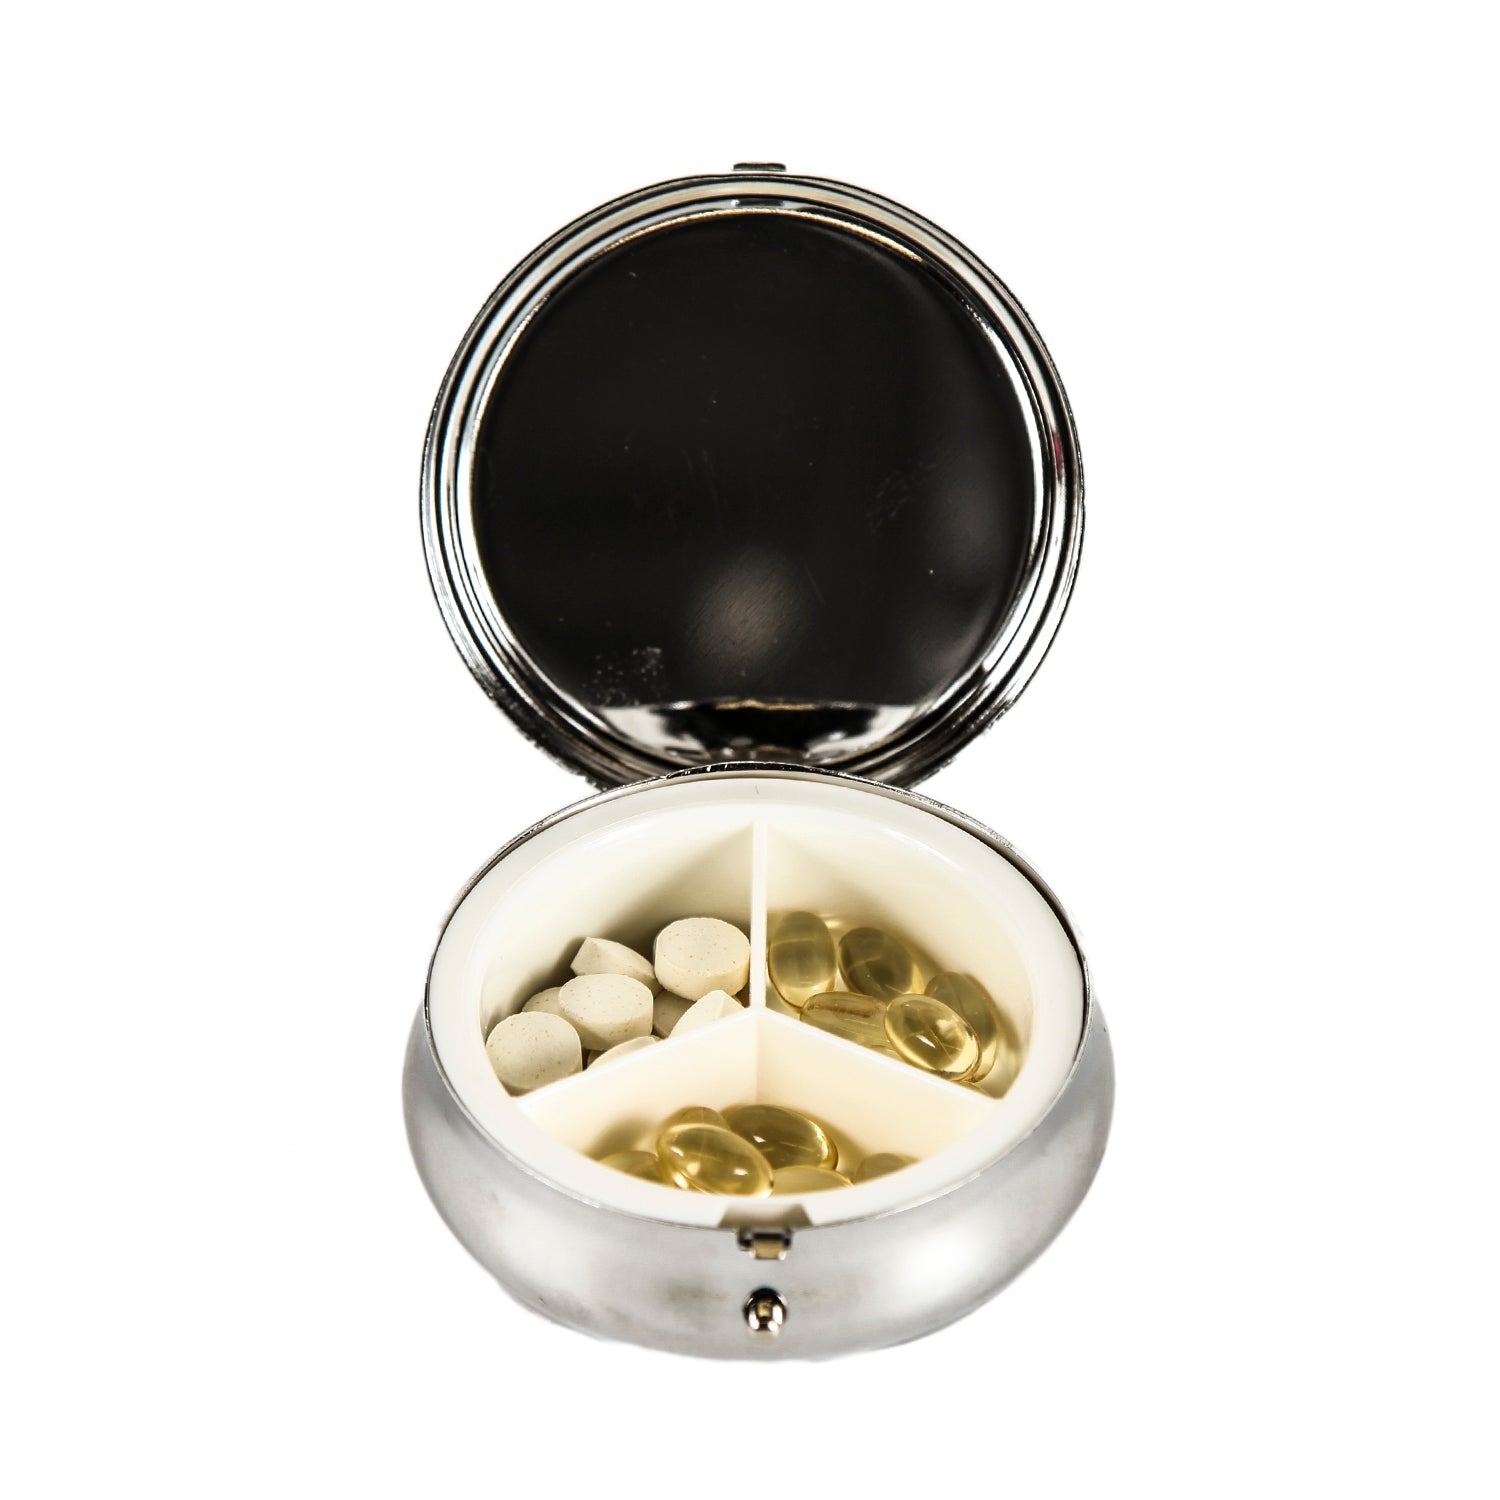 NL Signature Round Pill Case, Compact Circle Pill Box - Silver